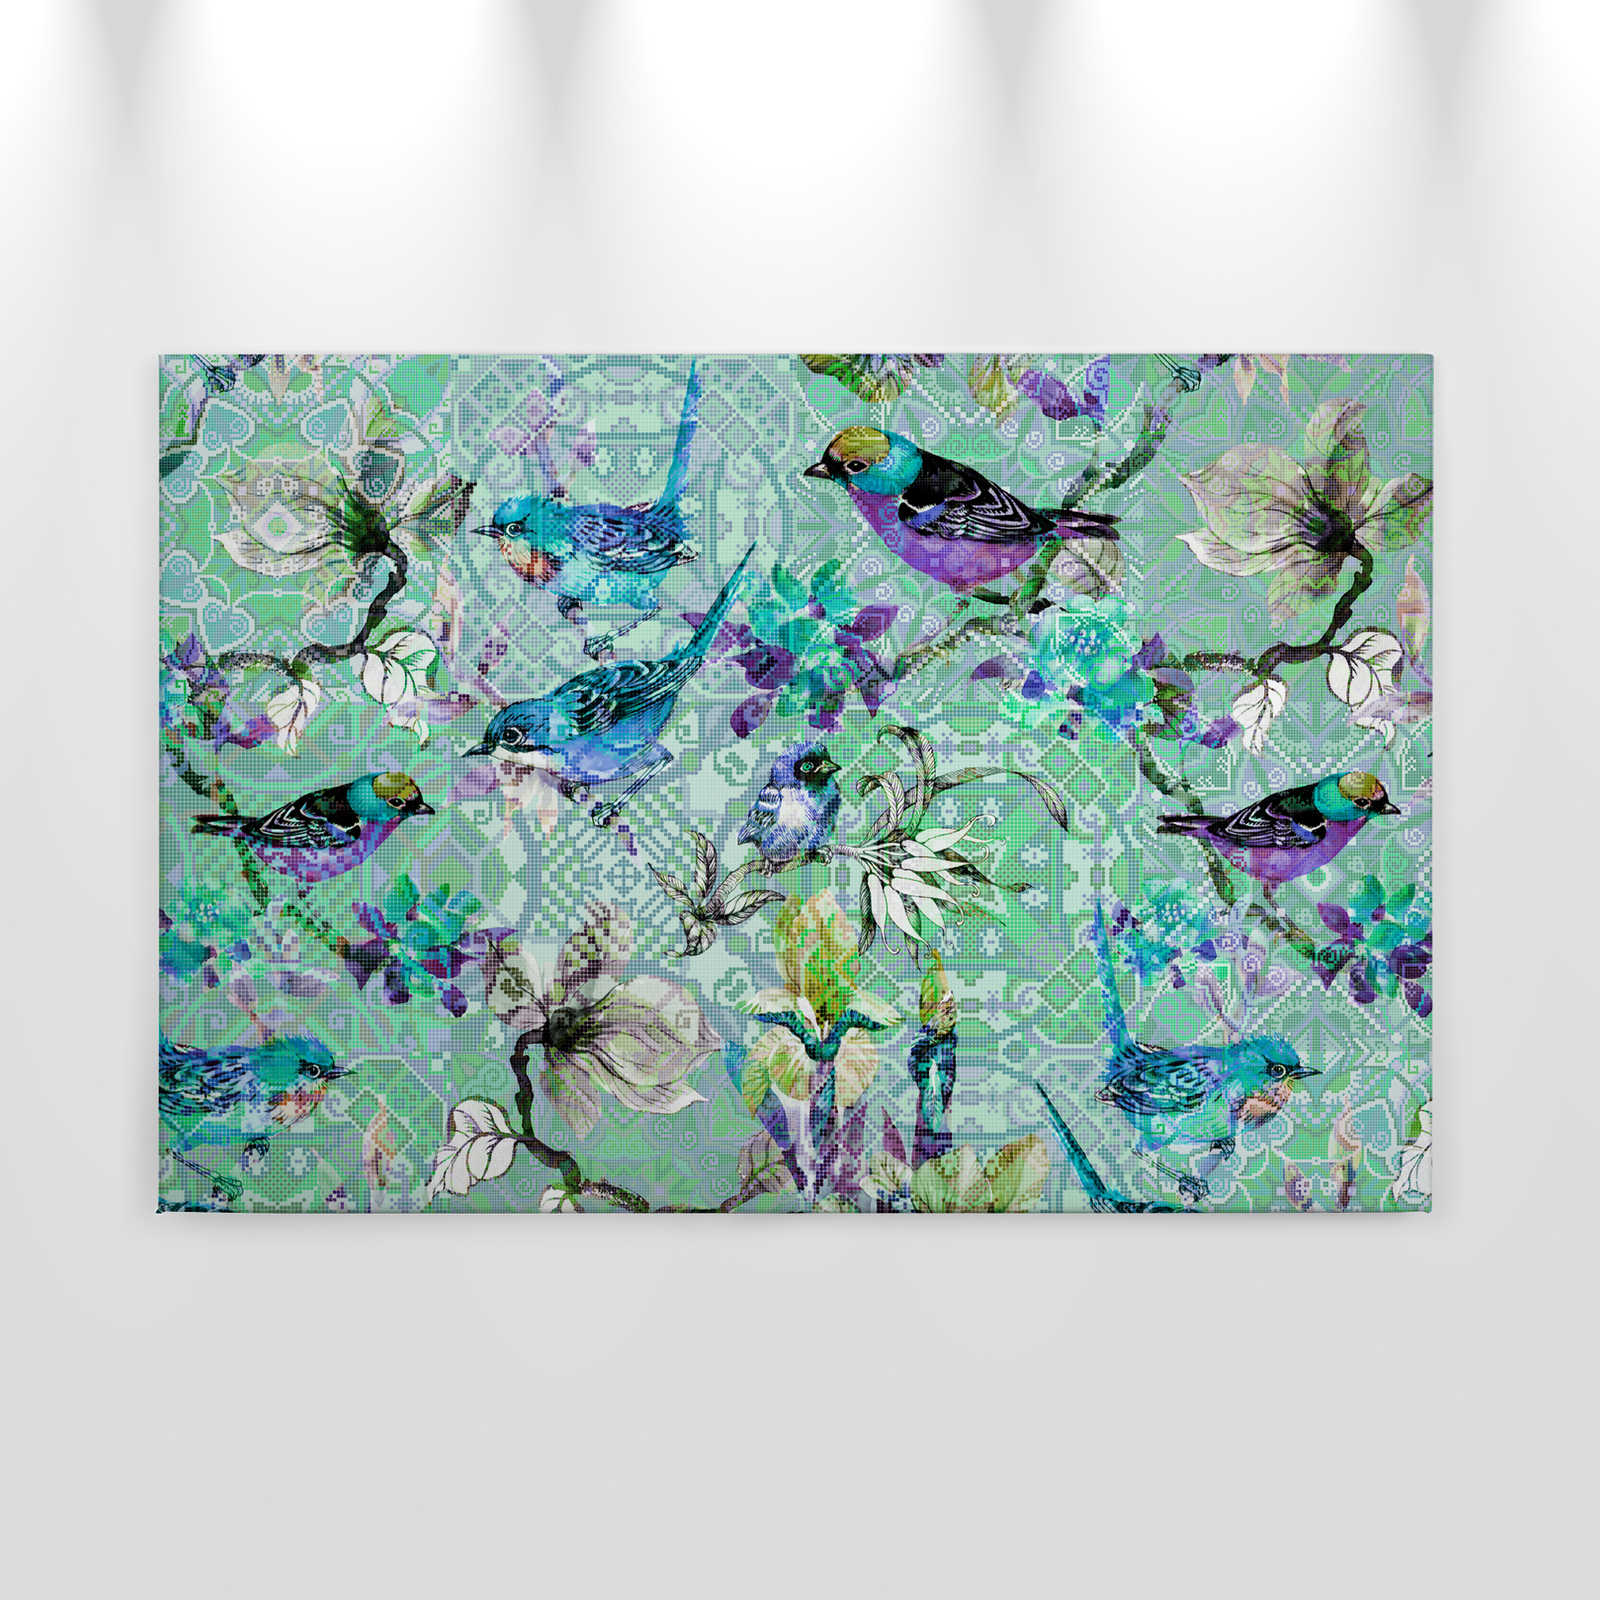             Vogel Leinwandbild mit Mosaik Muster | mosaic birds 3 – 0,90 m x 0,60 m
        